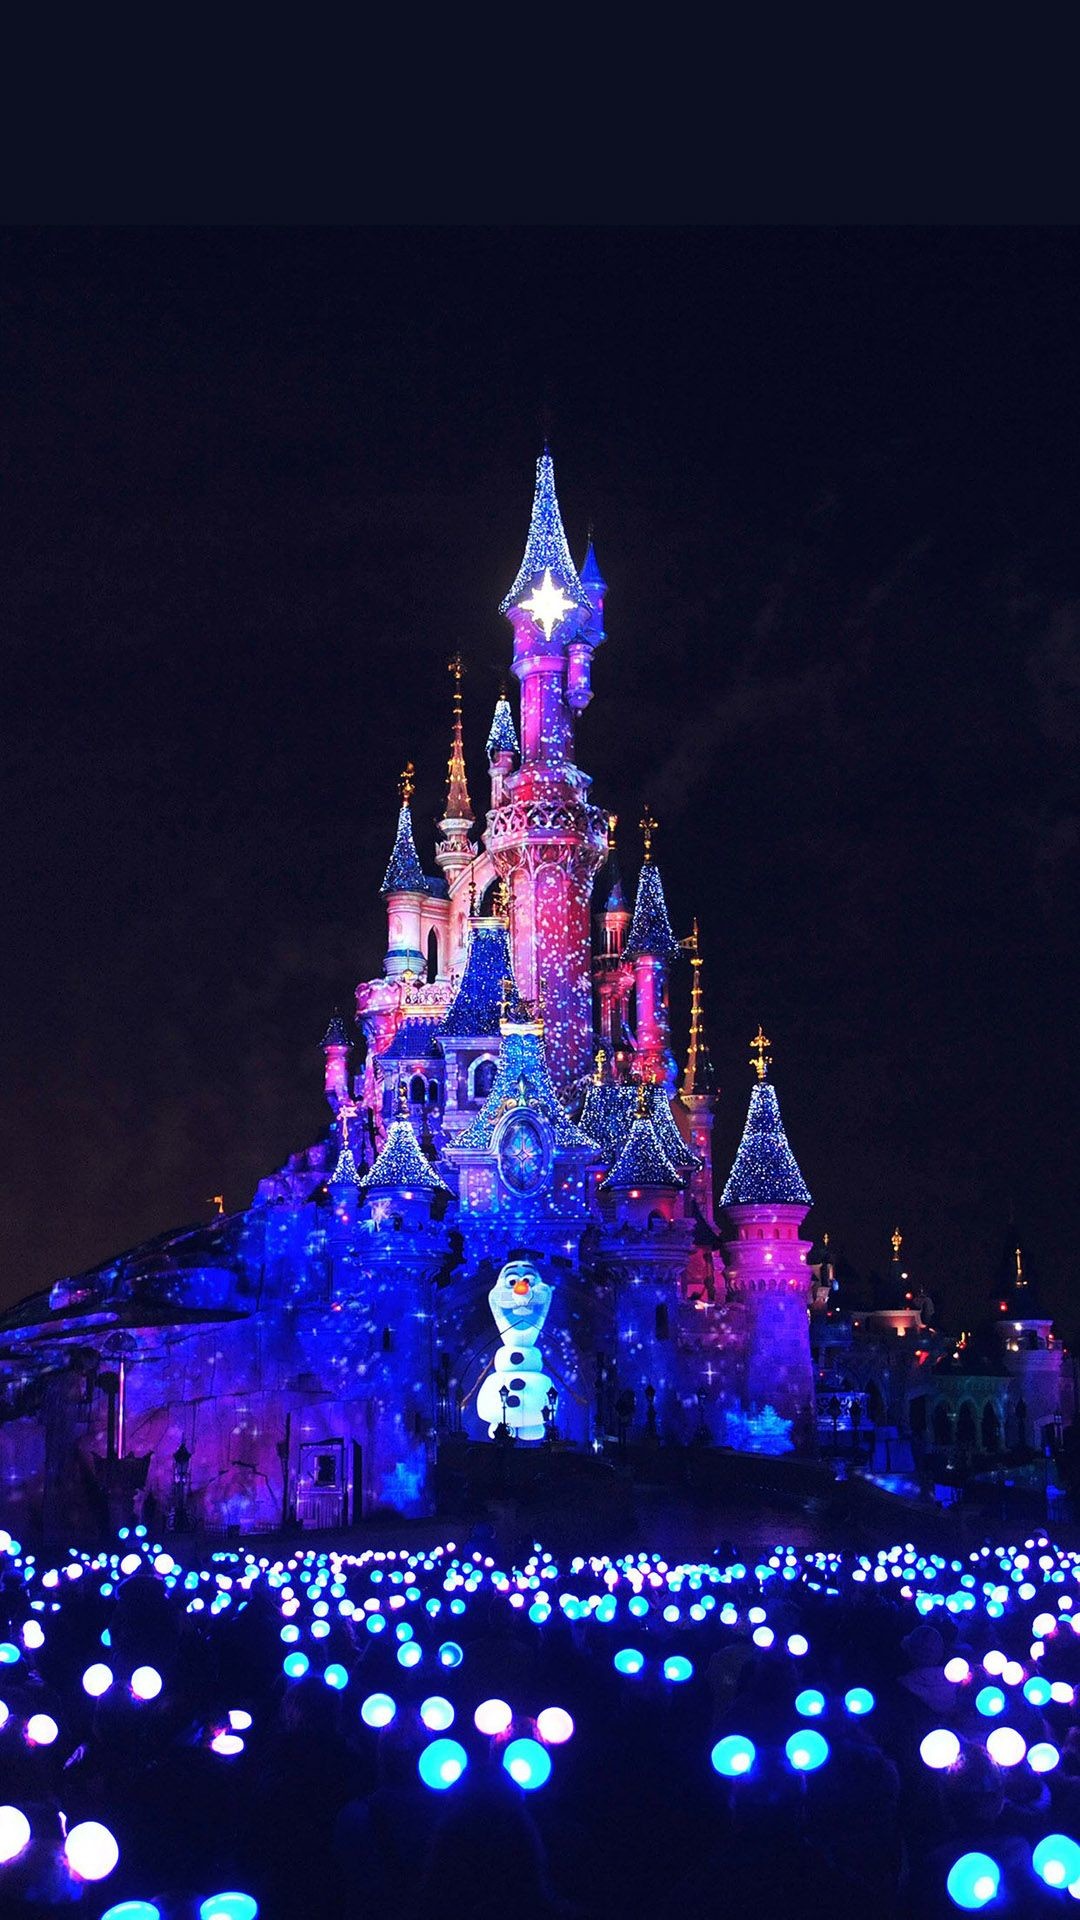 Disney Castle iPhone Wallpaper Image